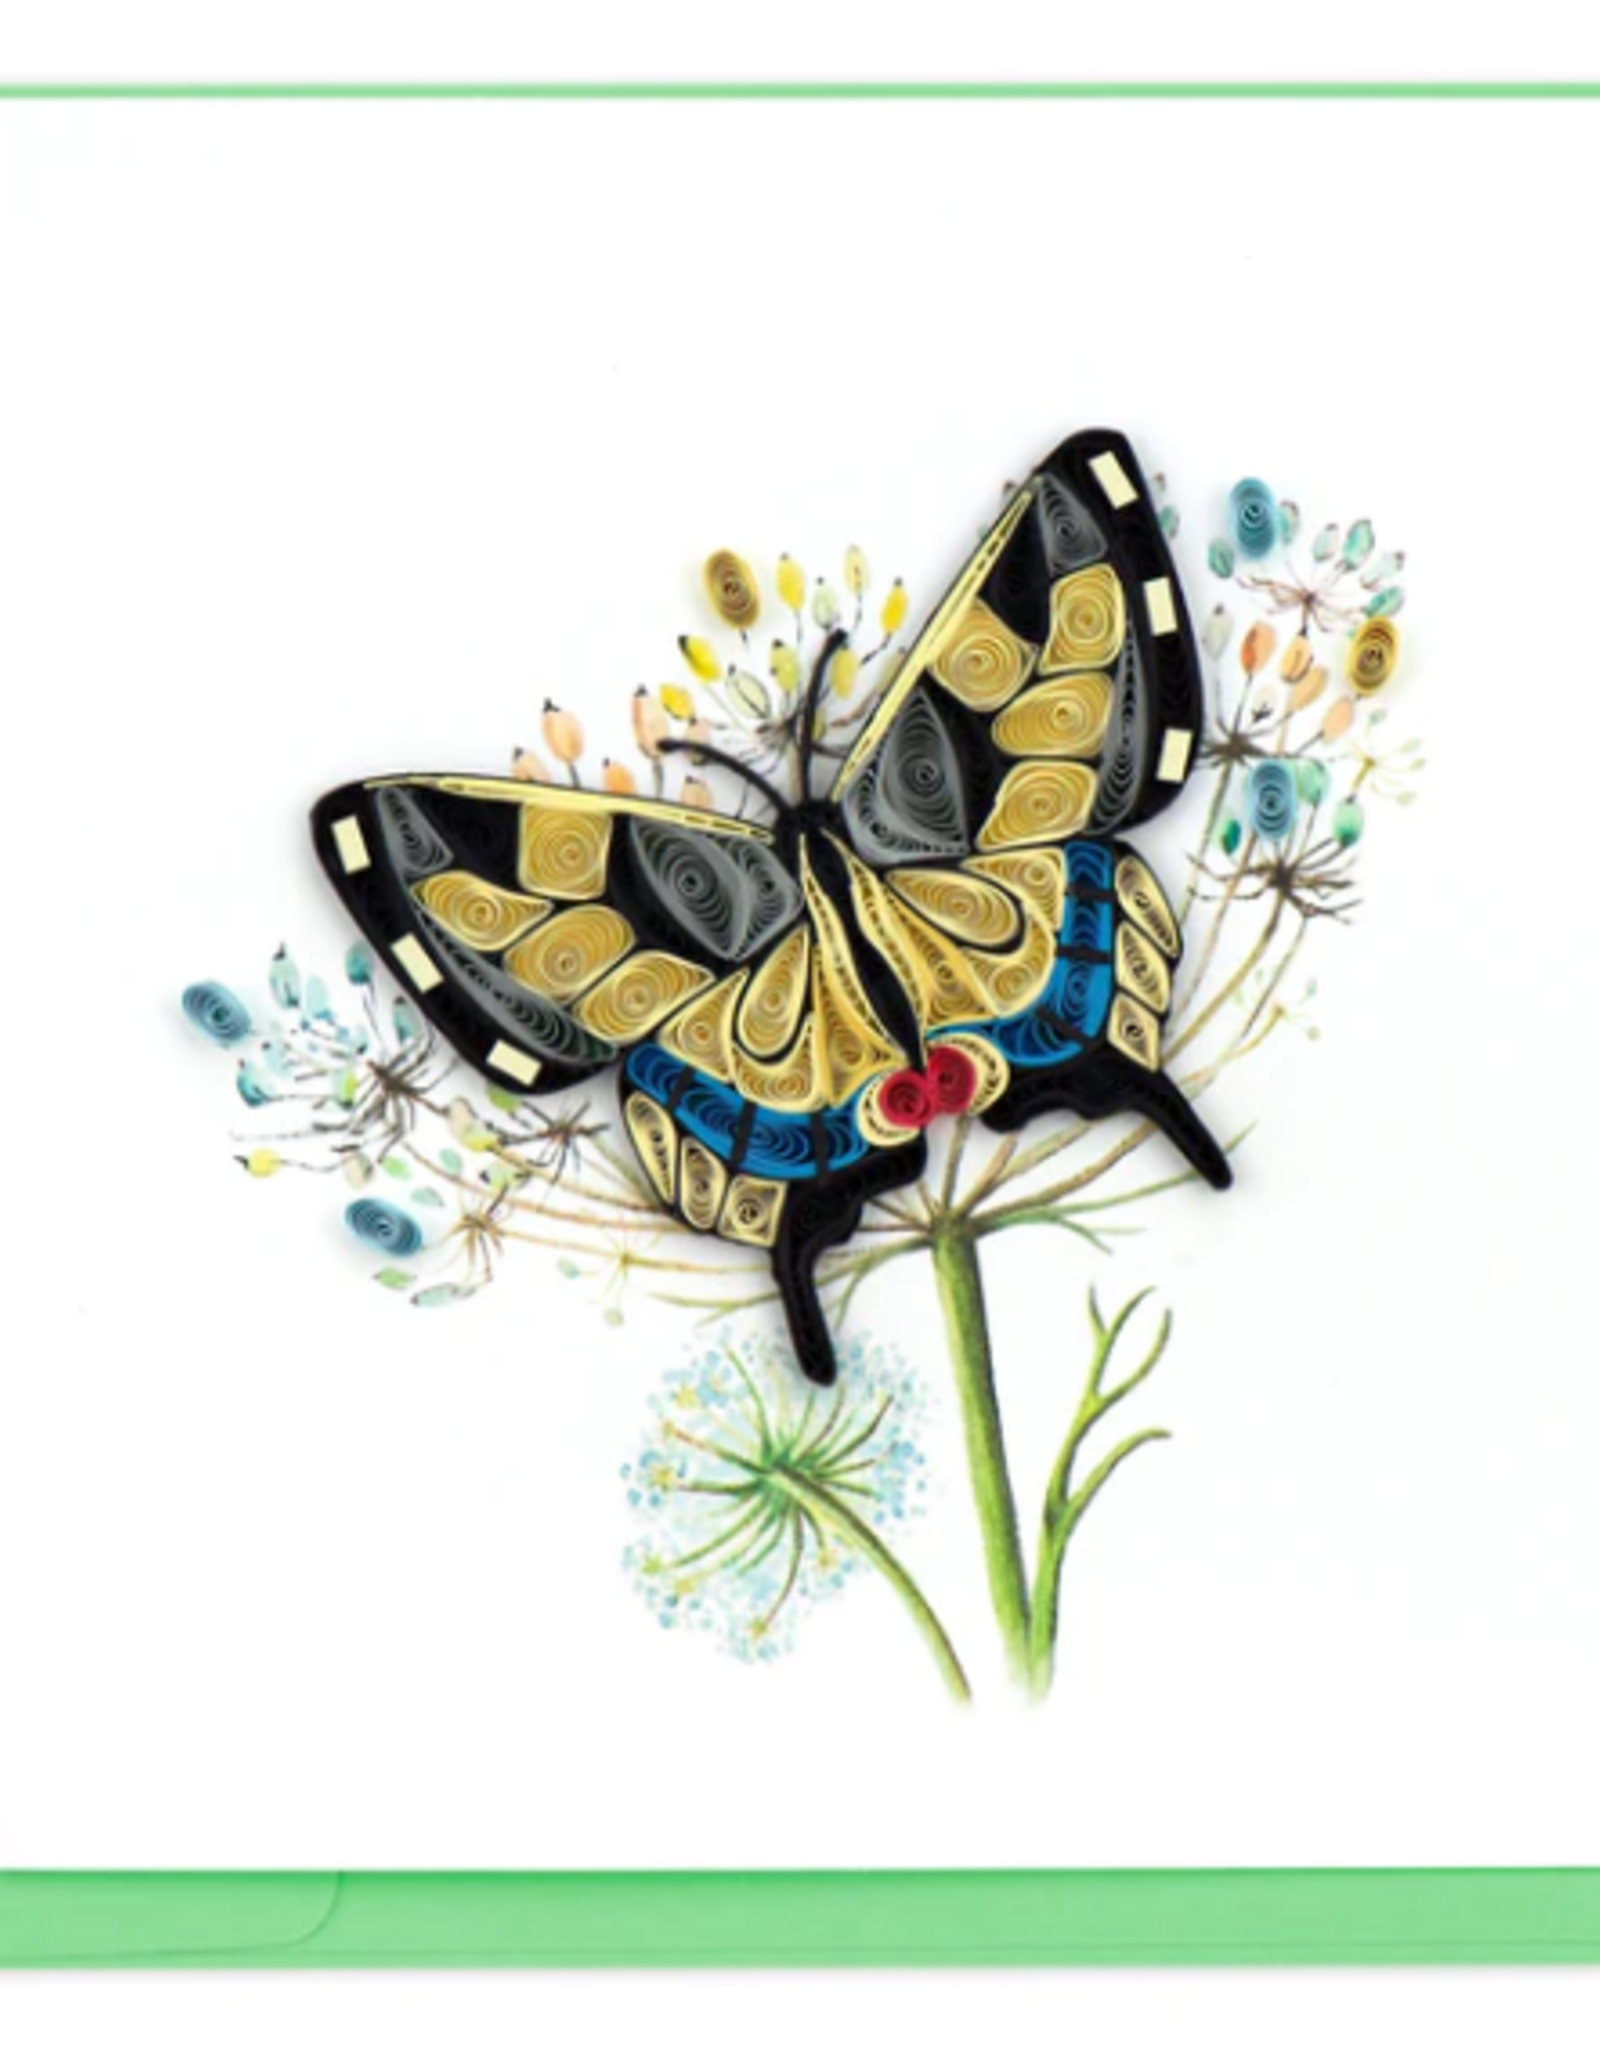 Quilling Card Swallowtail Butterfly - Vietnam